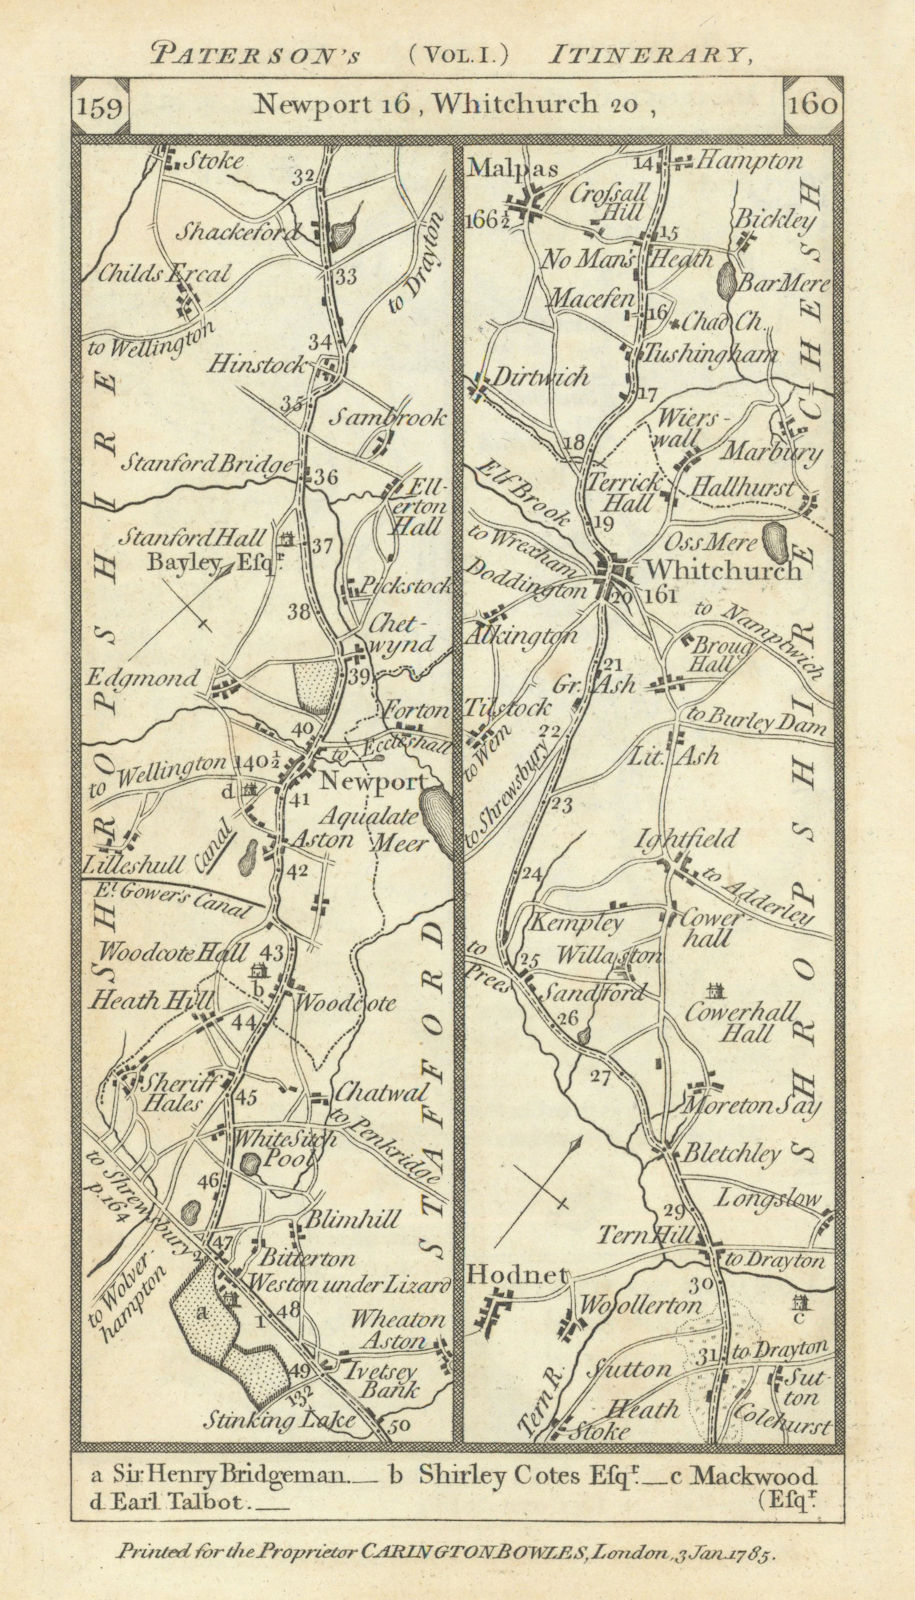 Associate Product Weston/Lizard-Newport-Whitchurch-Malpas road strip map PATERSON 1785 old